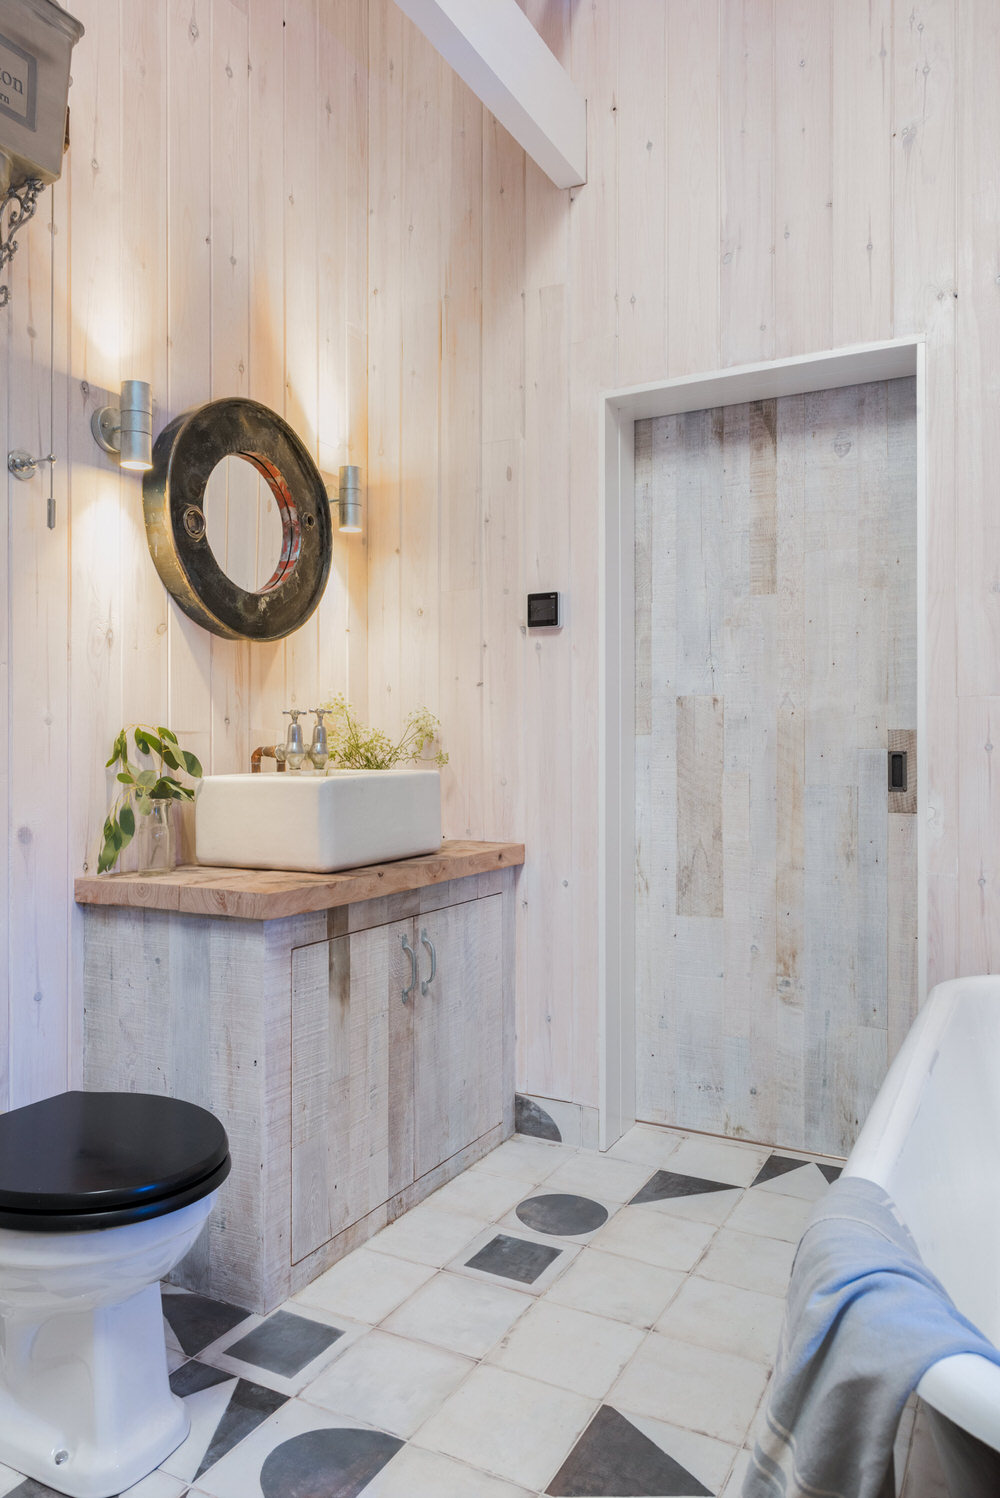 Wood and tiled bathroom